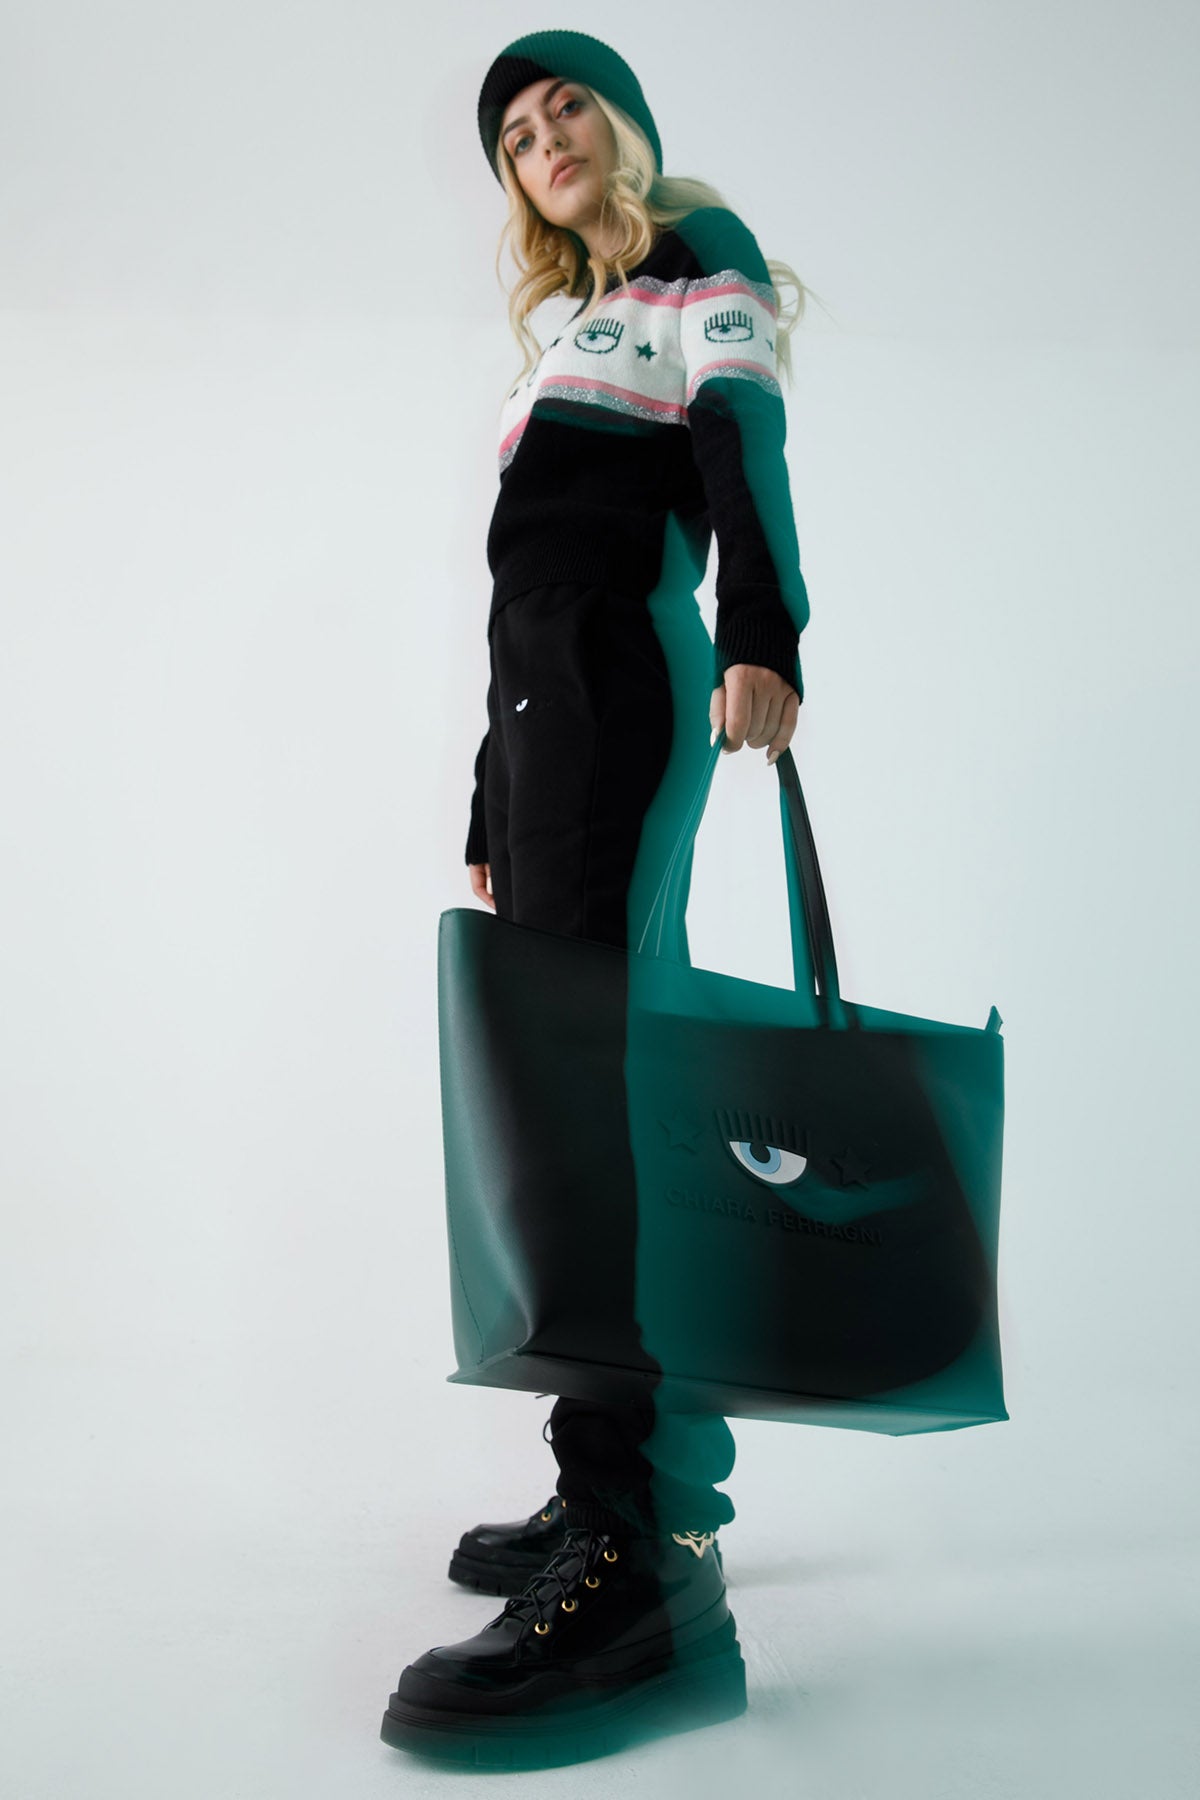 Chiara Ferragni Fermuarlı Shopping Bag Çanta-Libas Trendy Fashion Store